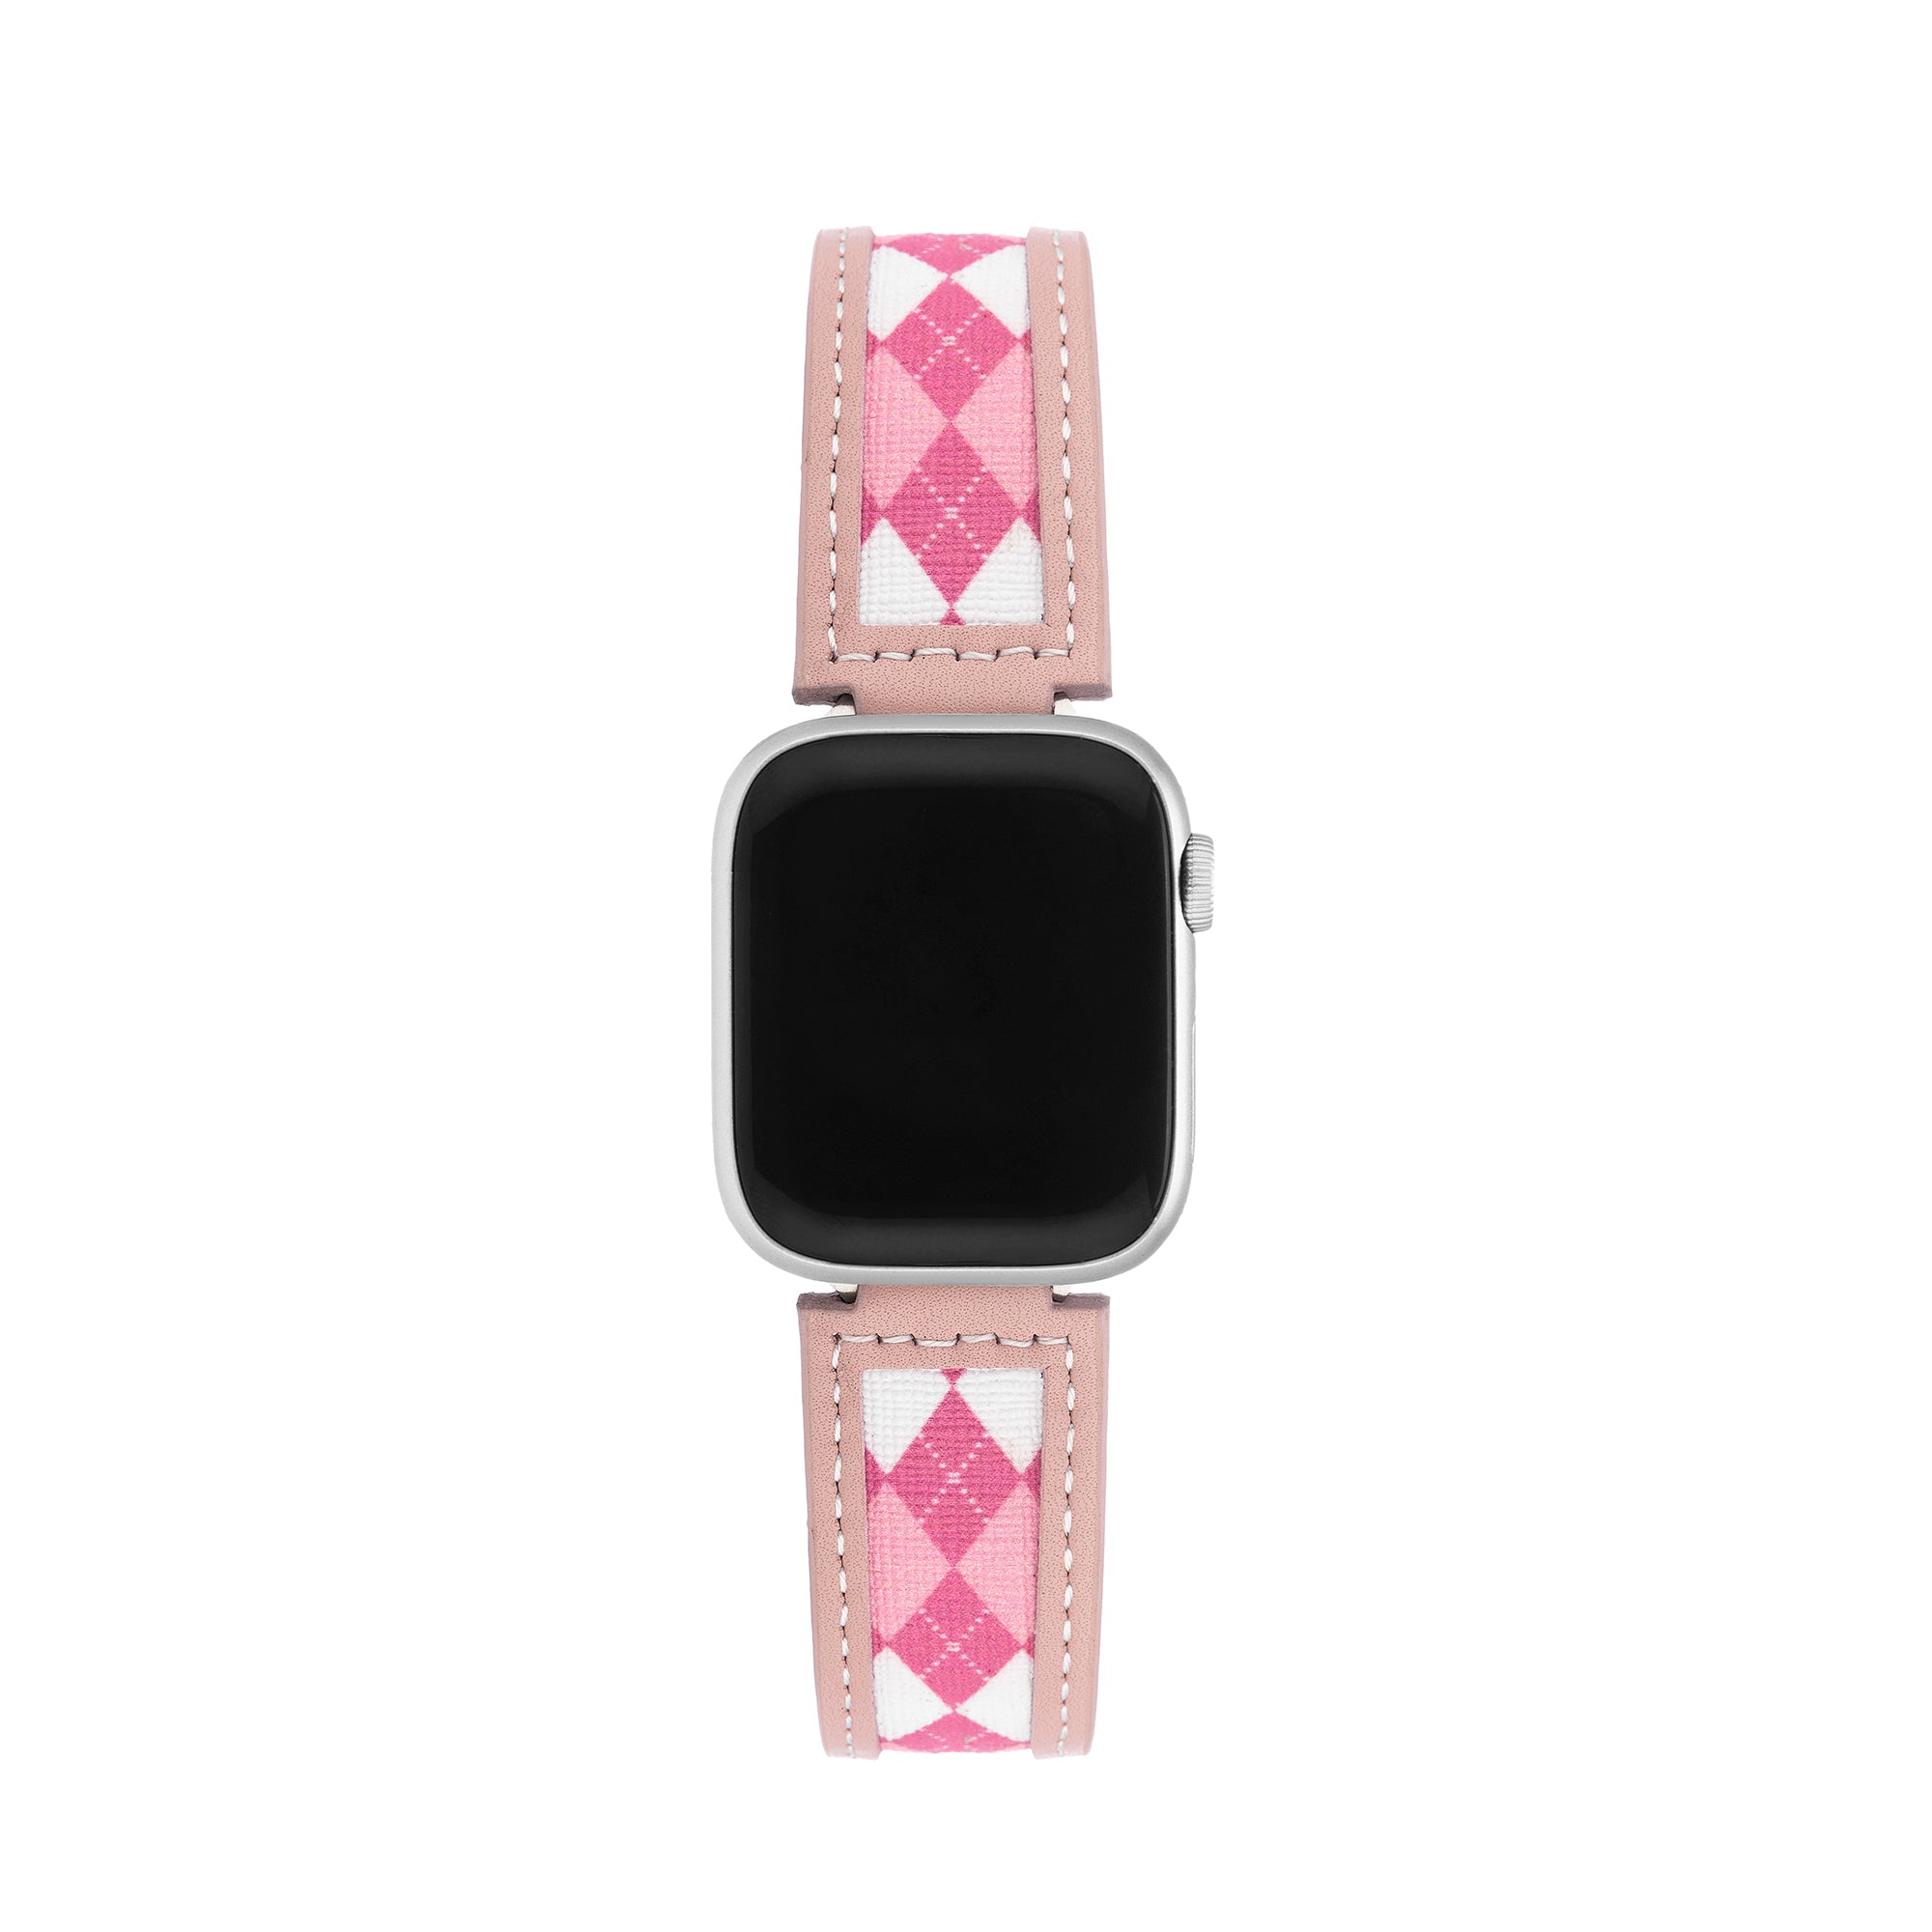 Preppy Checker Apple Watch Band